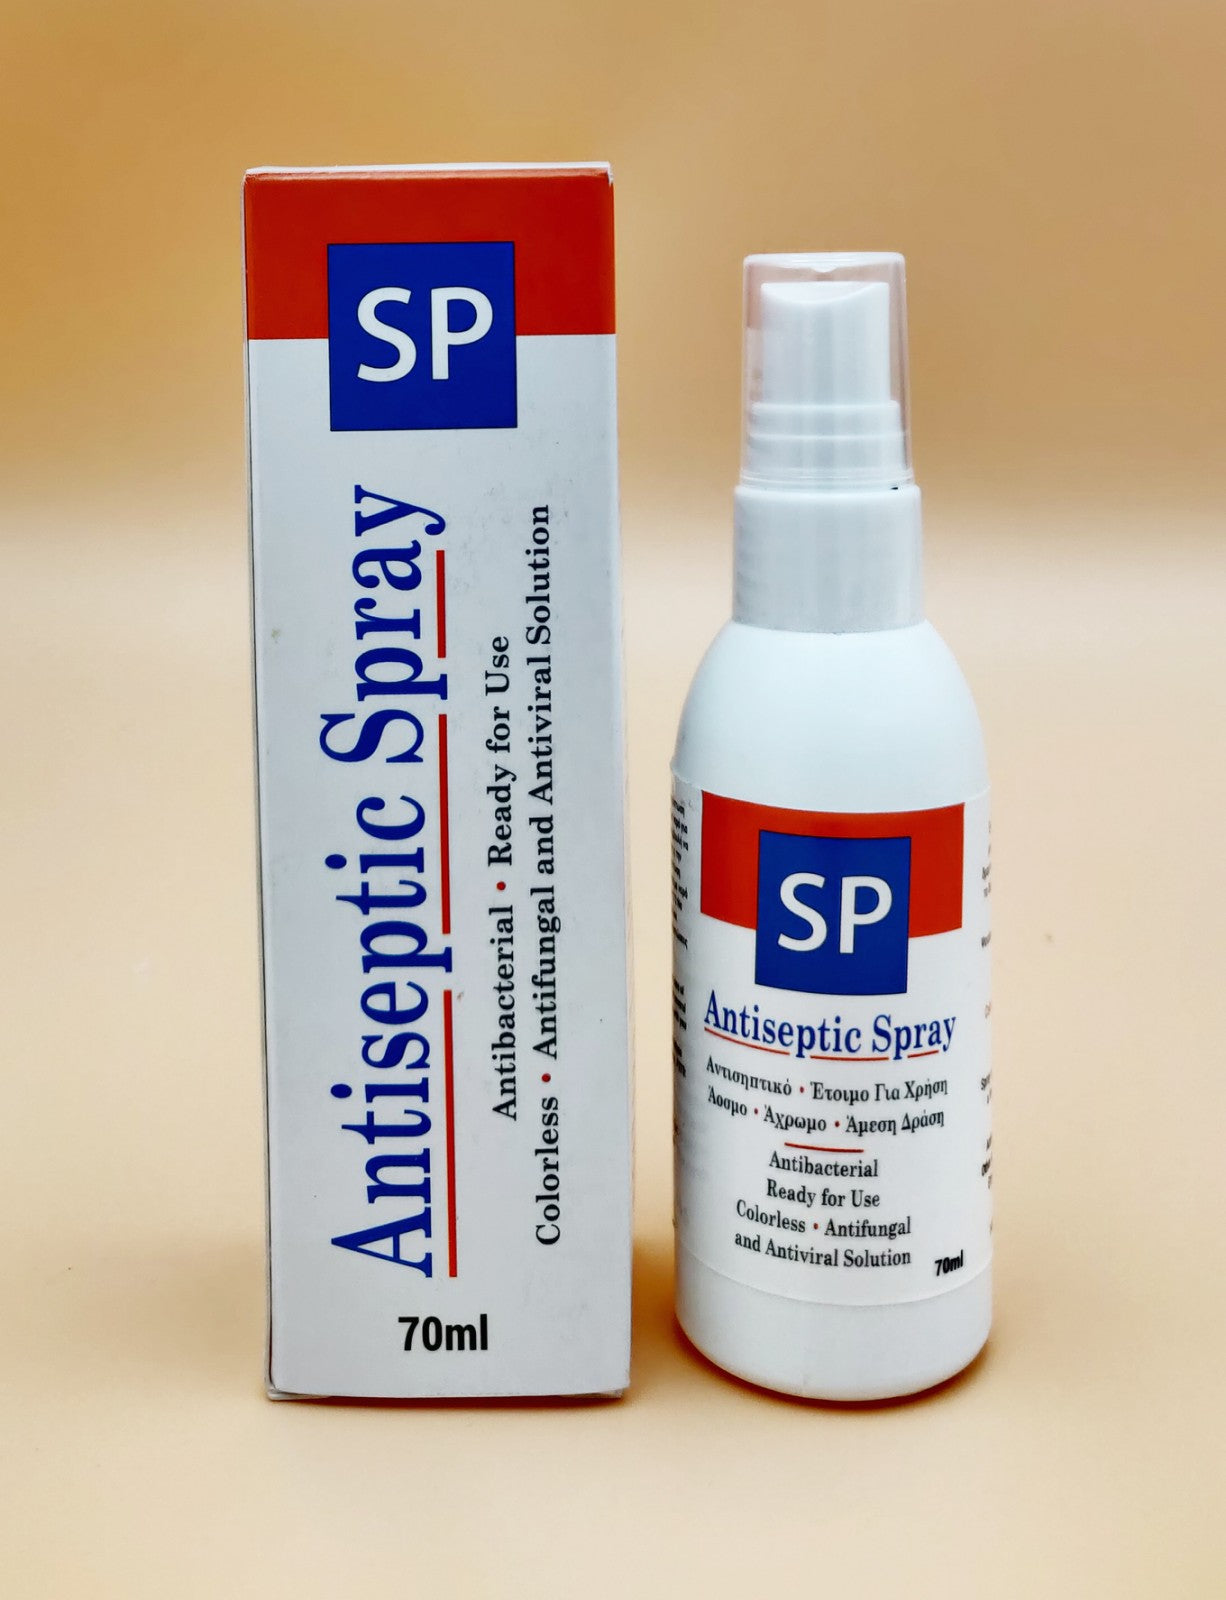 SP Antiseptic Spray